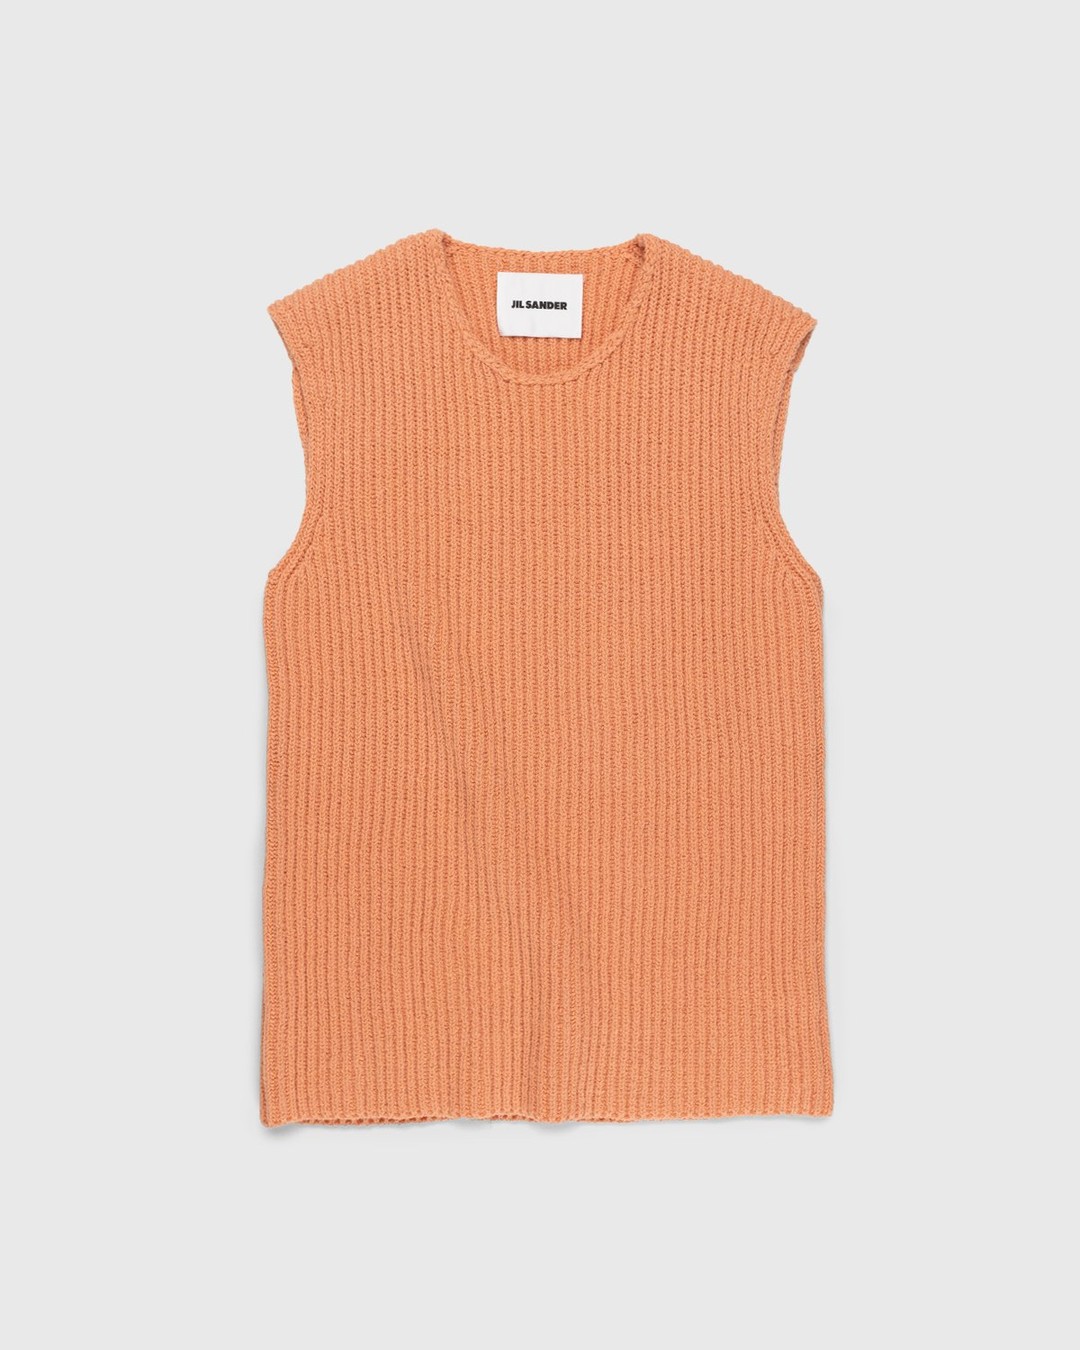 Jil Sander – Rib Knit Vest Orange - Knitwear - Orange - Image 1